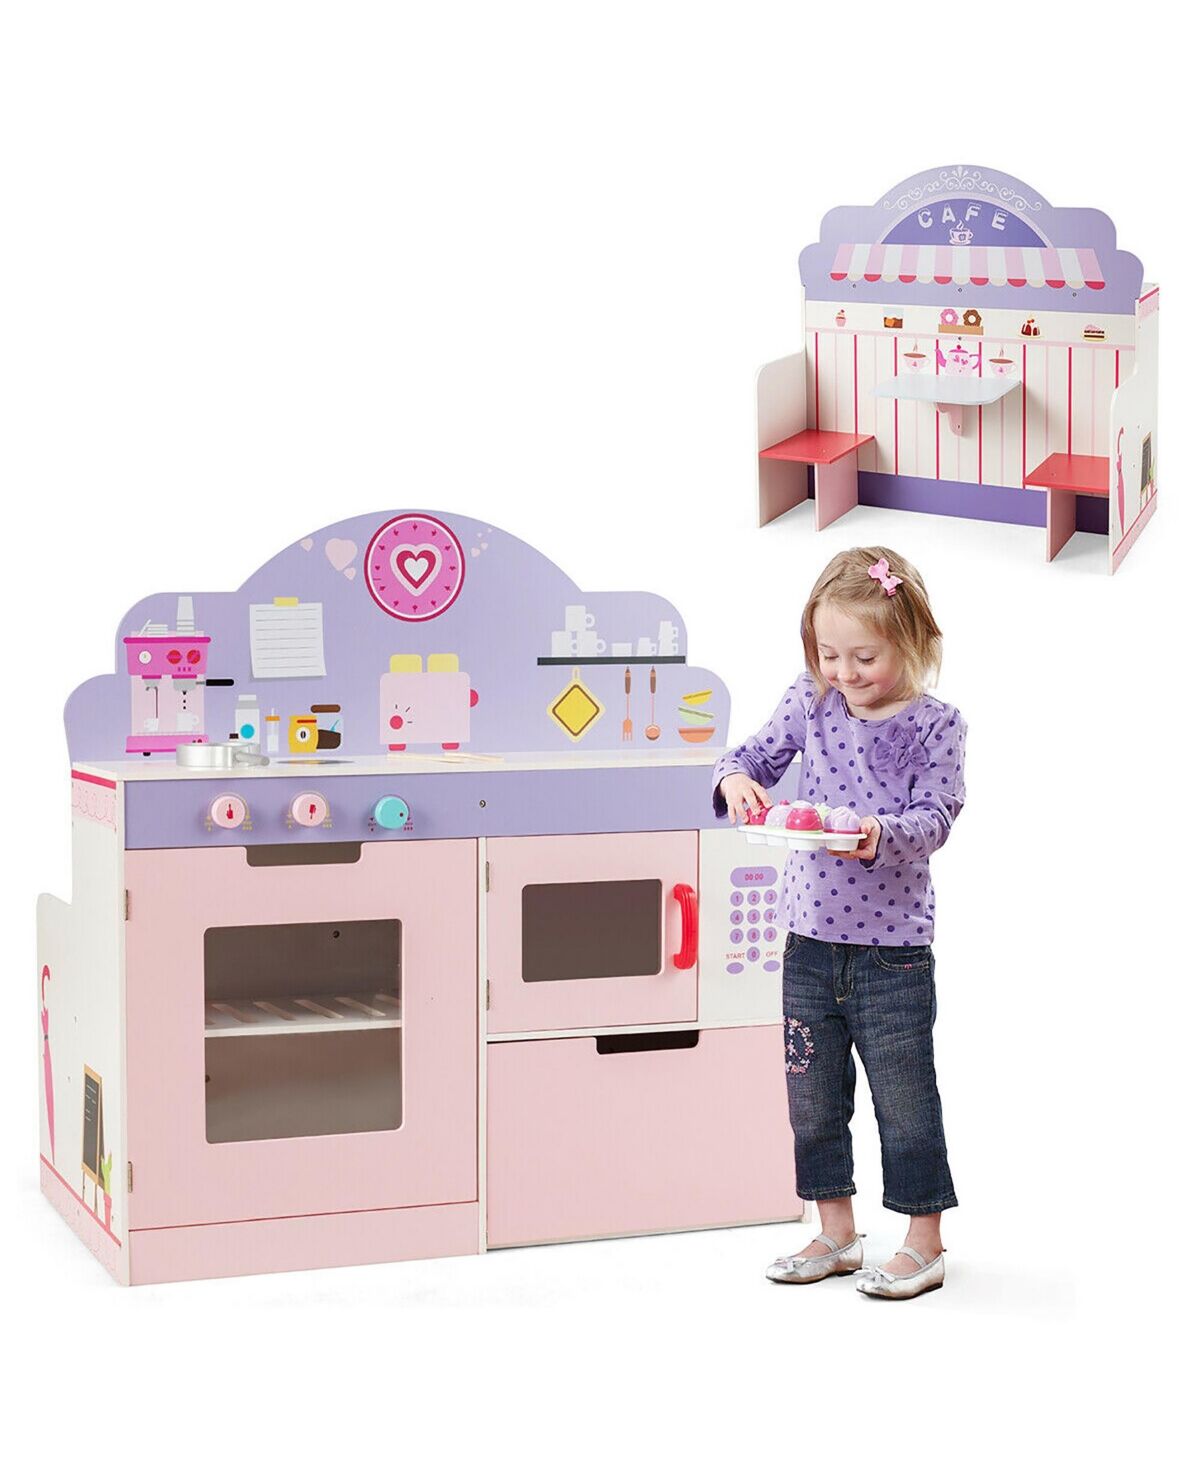 Costway 2 in 1 Kids Play Kitchen & Cafe Restaurant Wooden Pretend Cooking Playset Toy - Pink